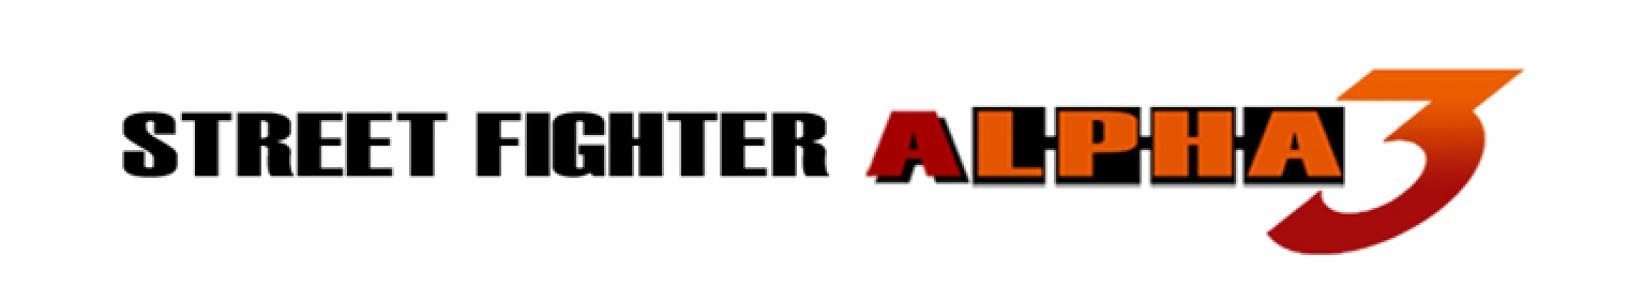 Street Fighter Alpha 3 banner